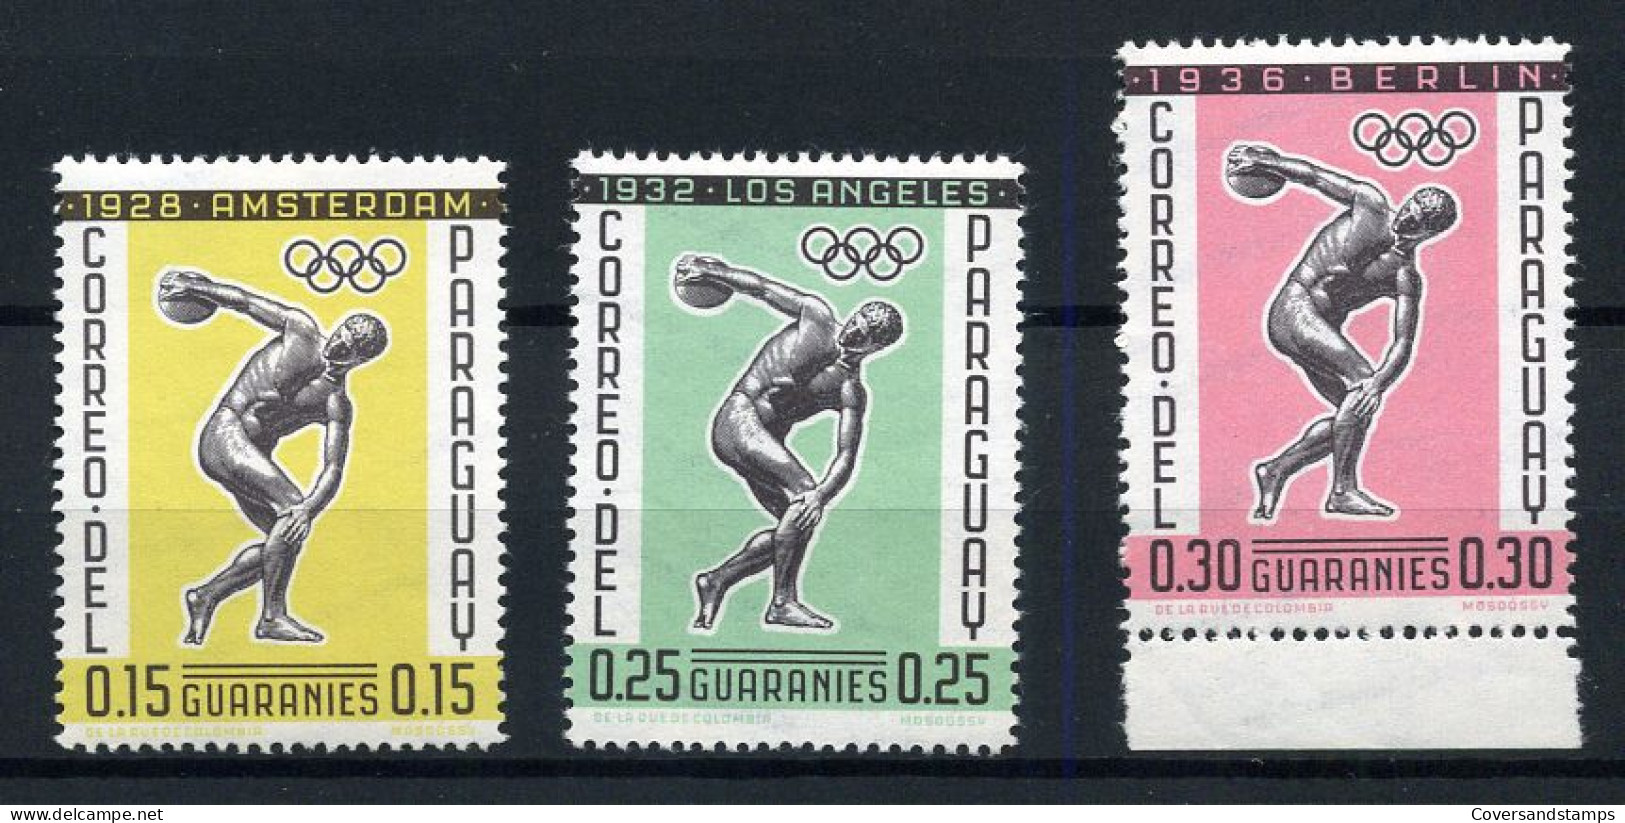 Paraguay - Olympic Games Berlin 1936 - Ete 1936: Berlin